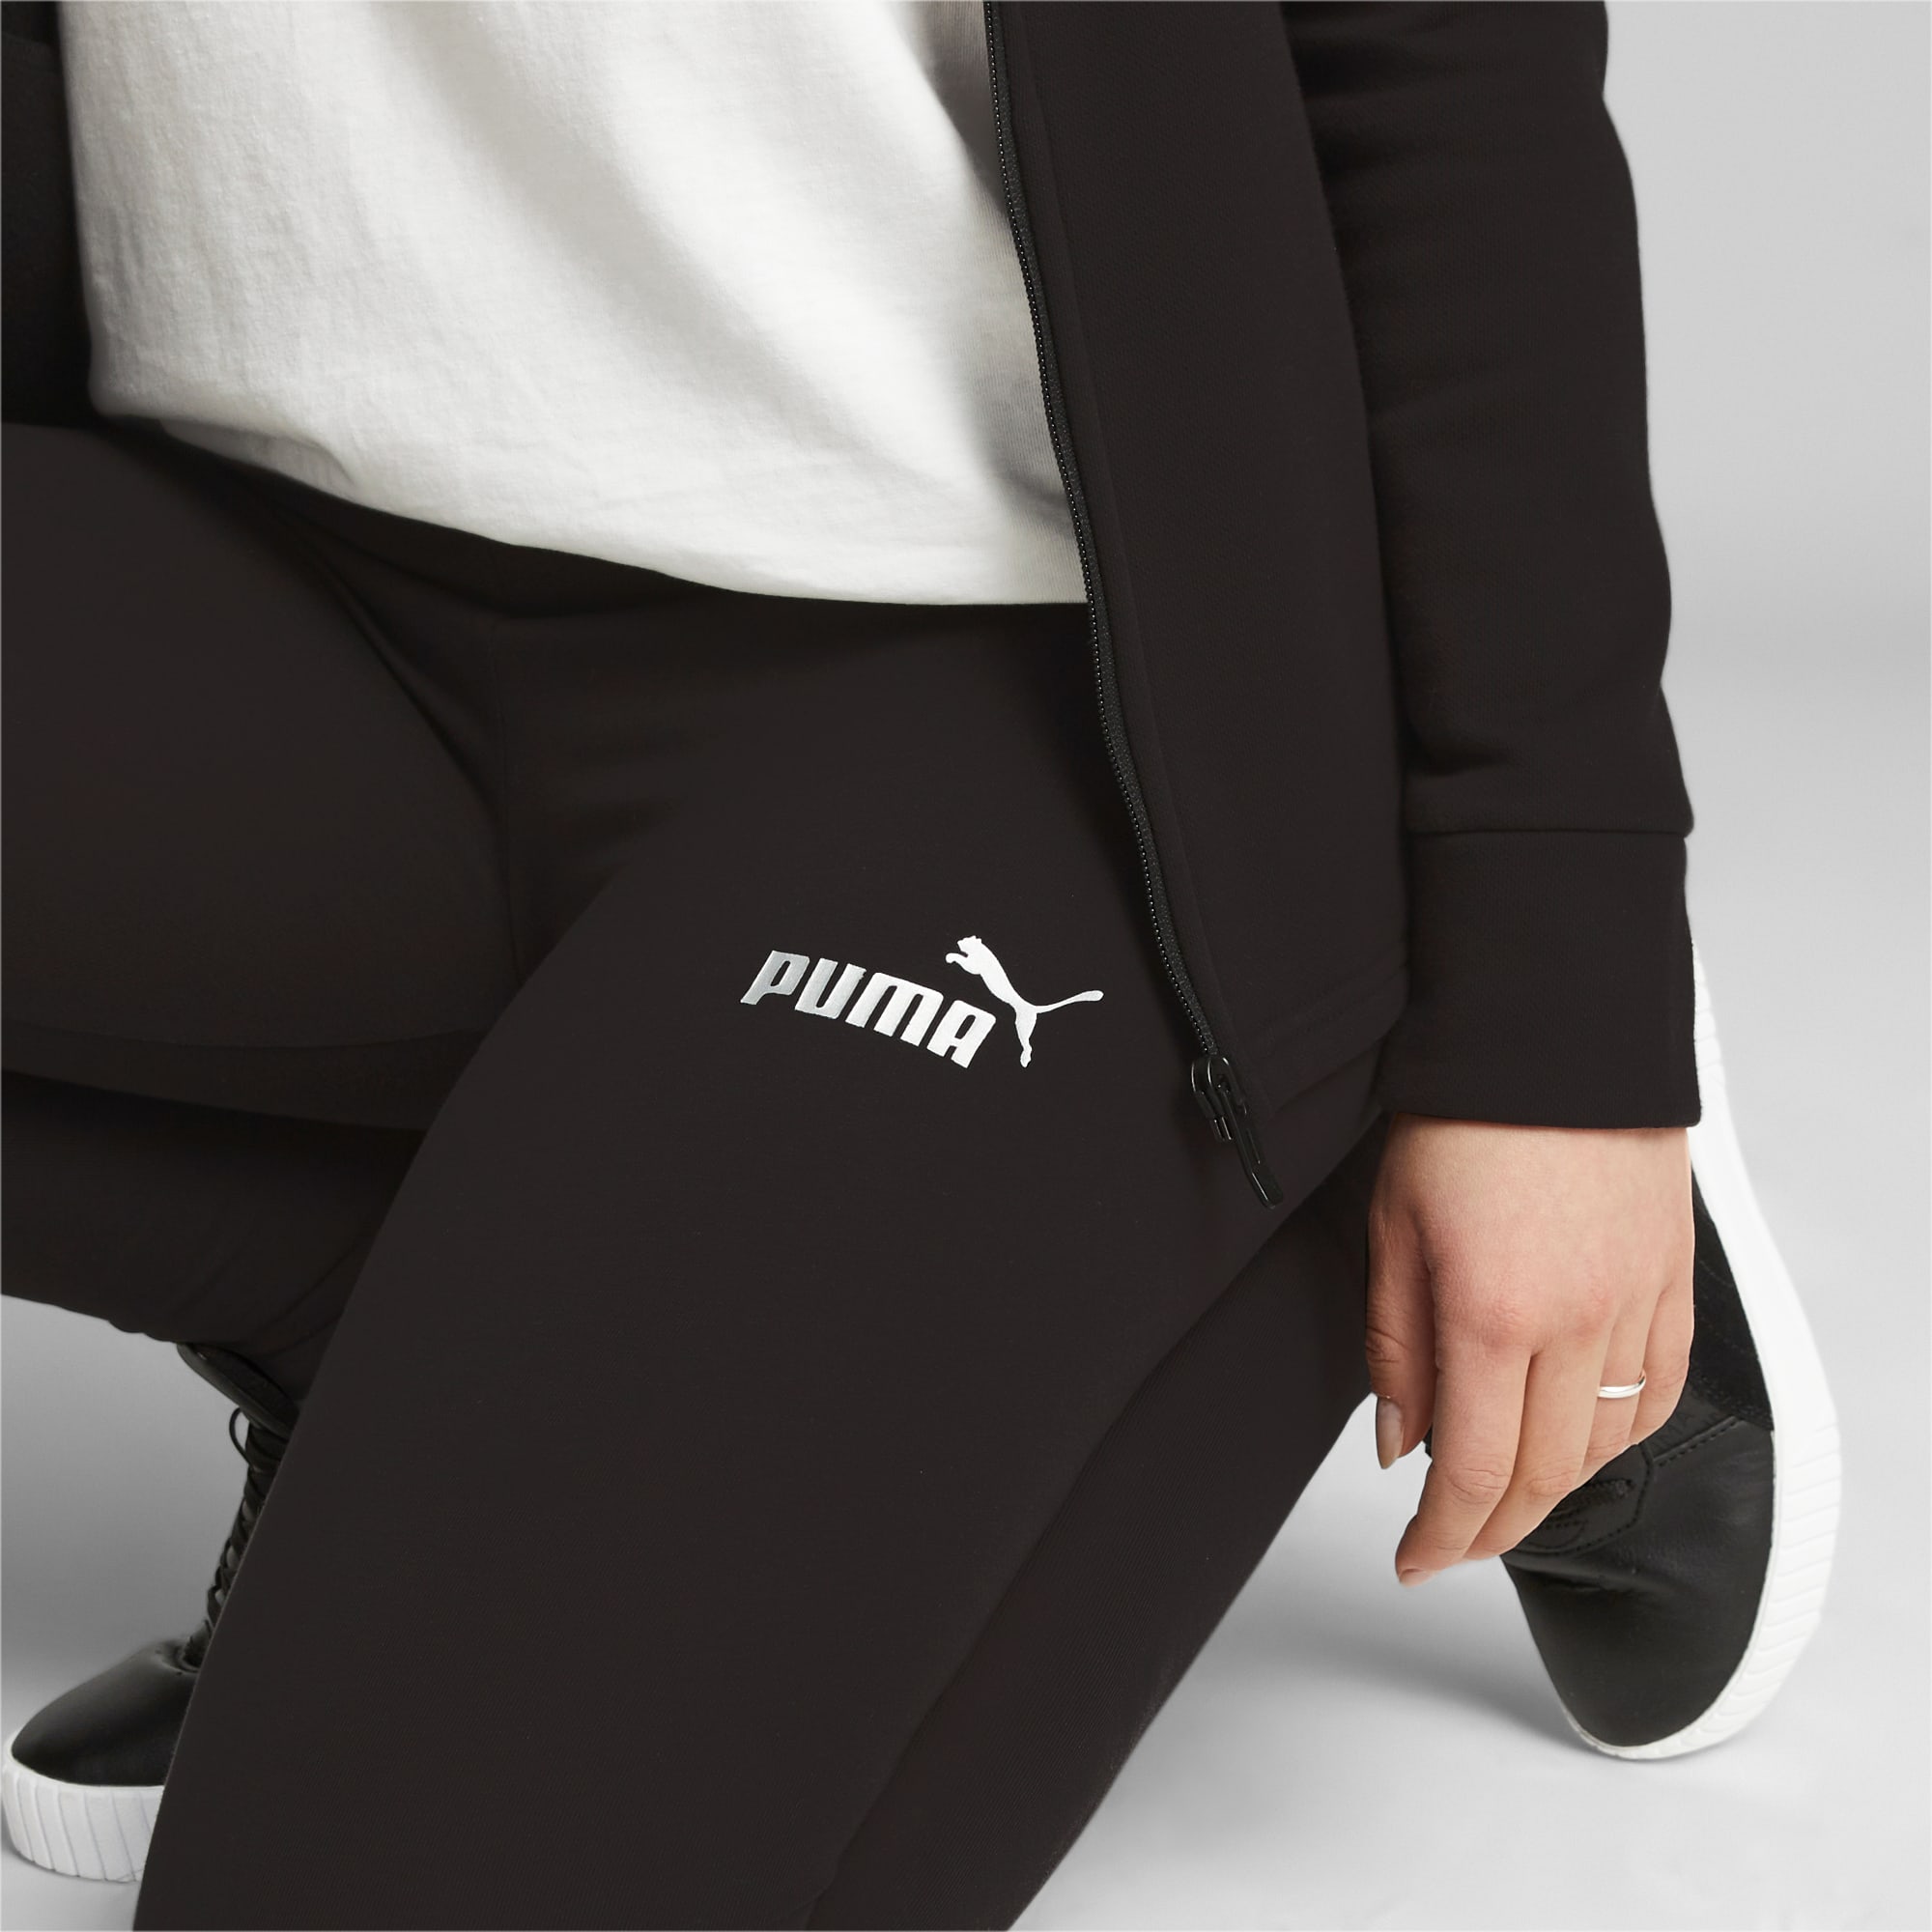 PUMA Women's Metallic Tracksuit, Black, Size S, Clothing